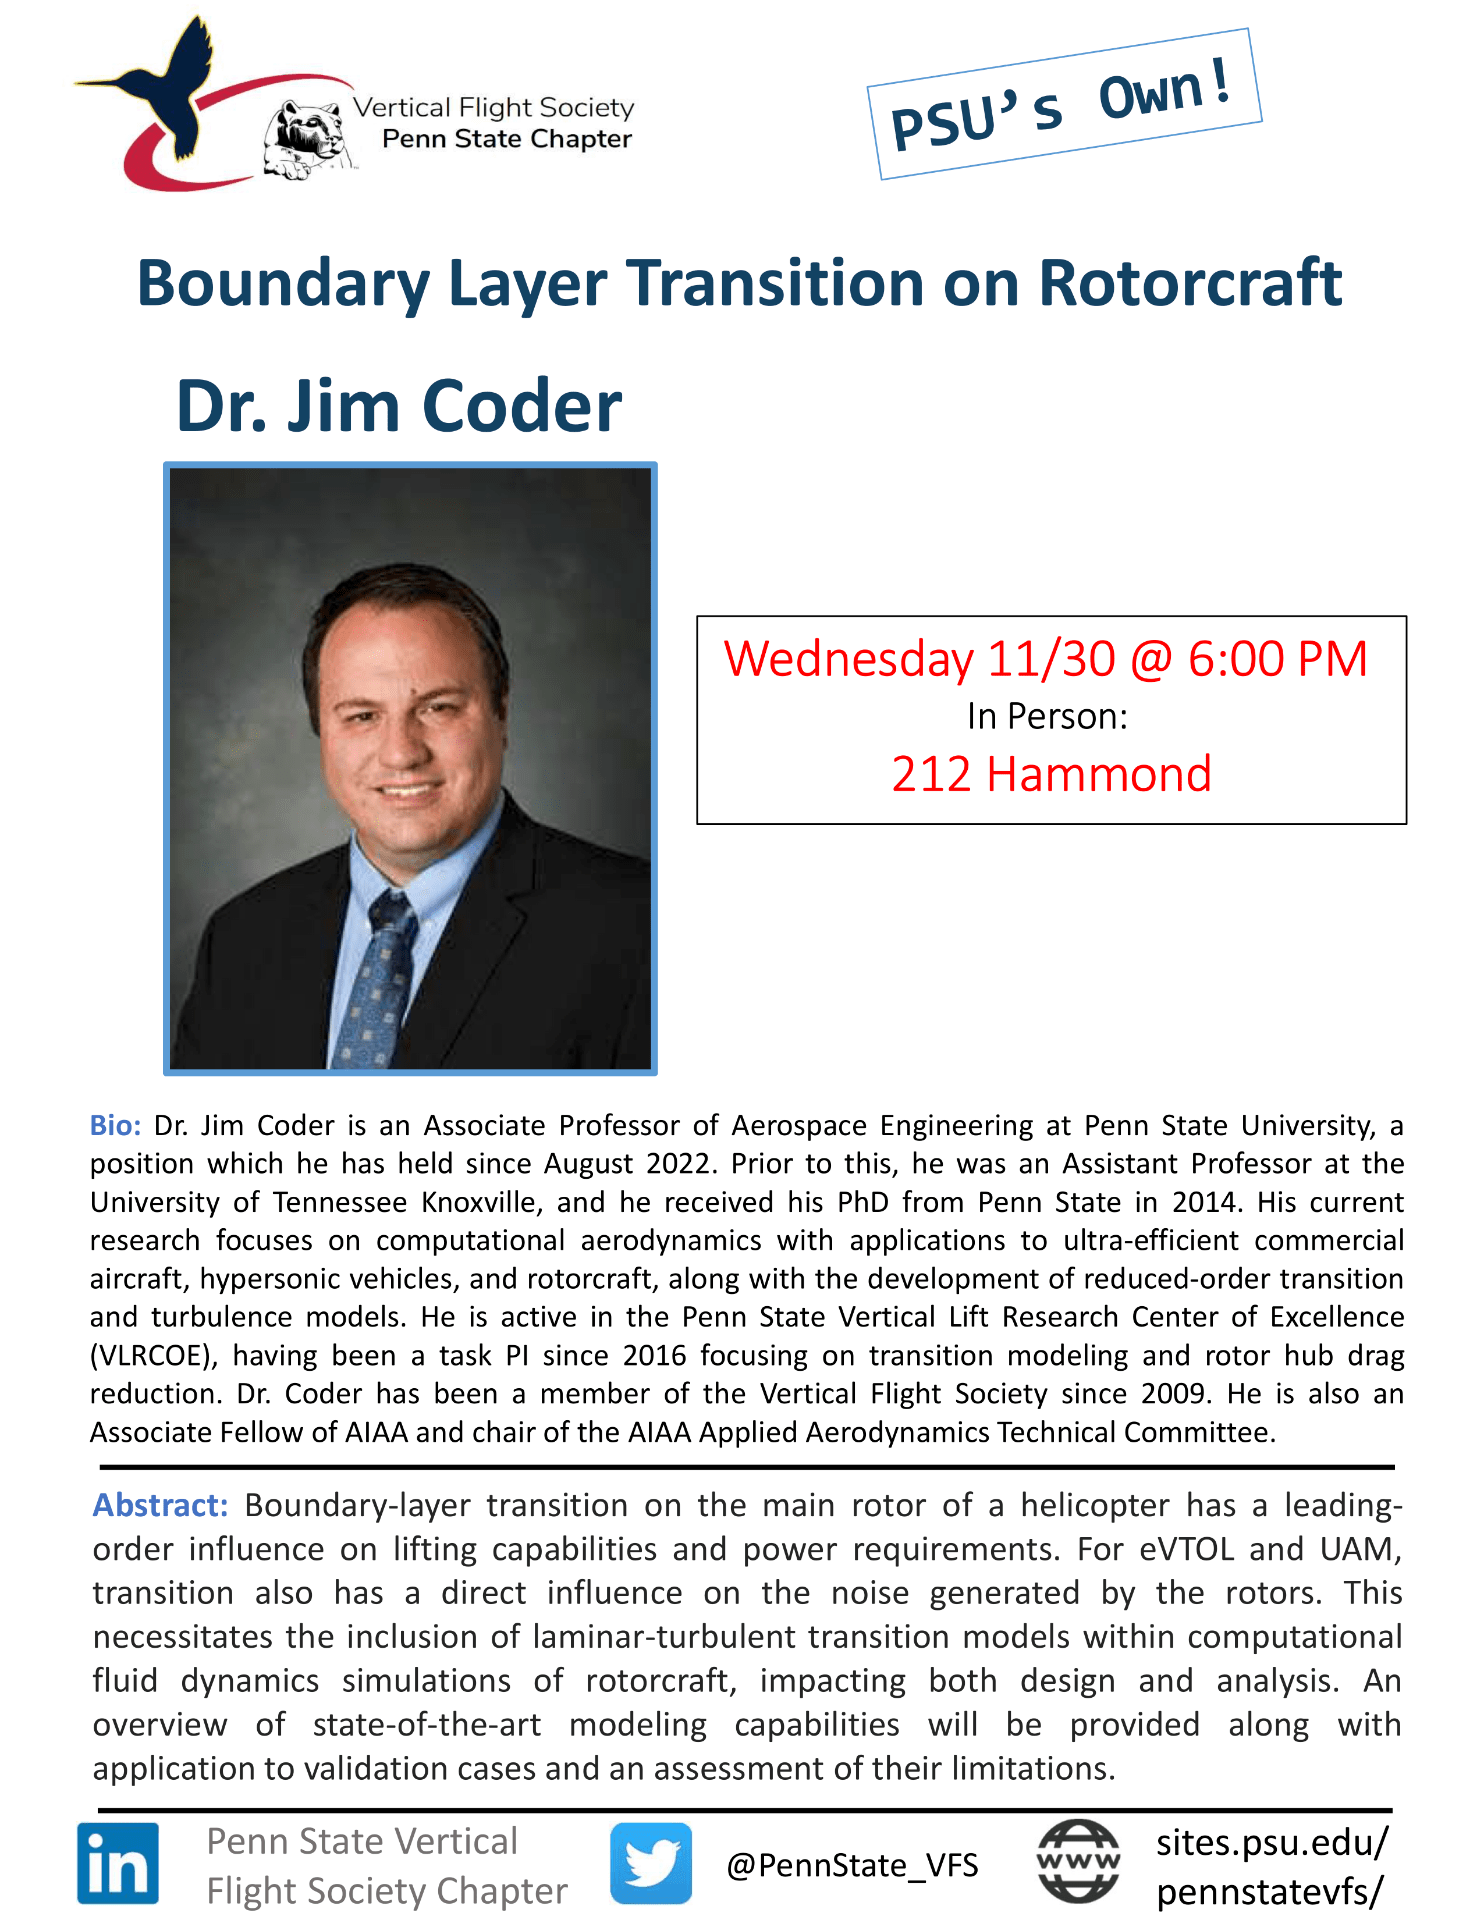 Tech Talk – Dr Jim Coder – Boundary Layer Transition on Rotorcraft